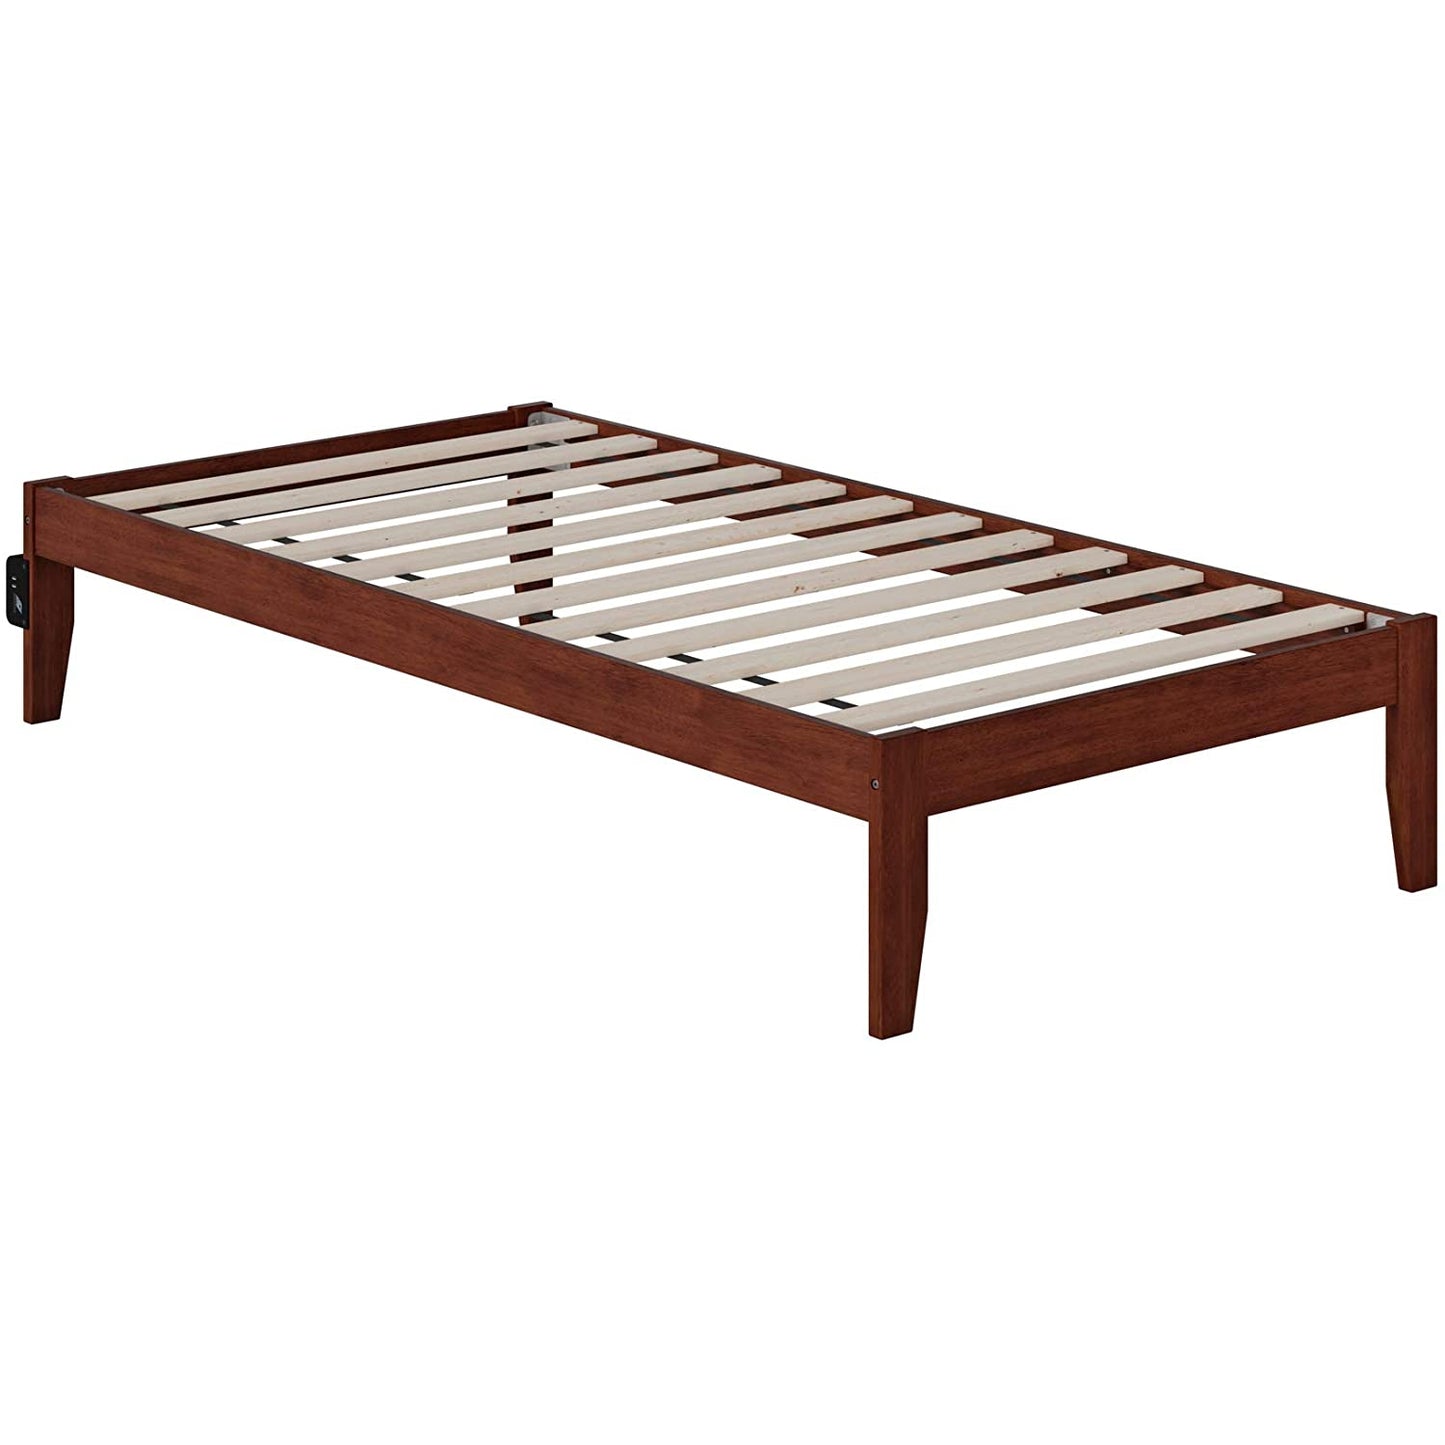 Wood Platform Bed With Storage Space